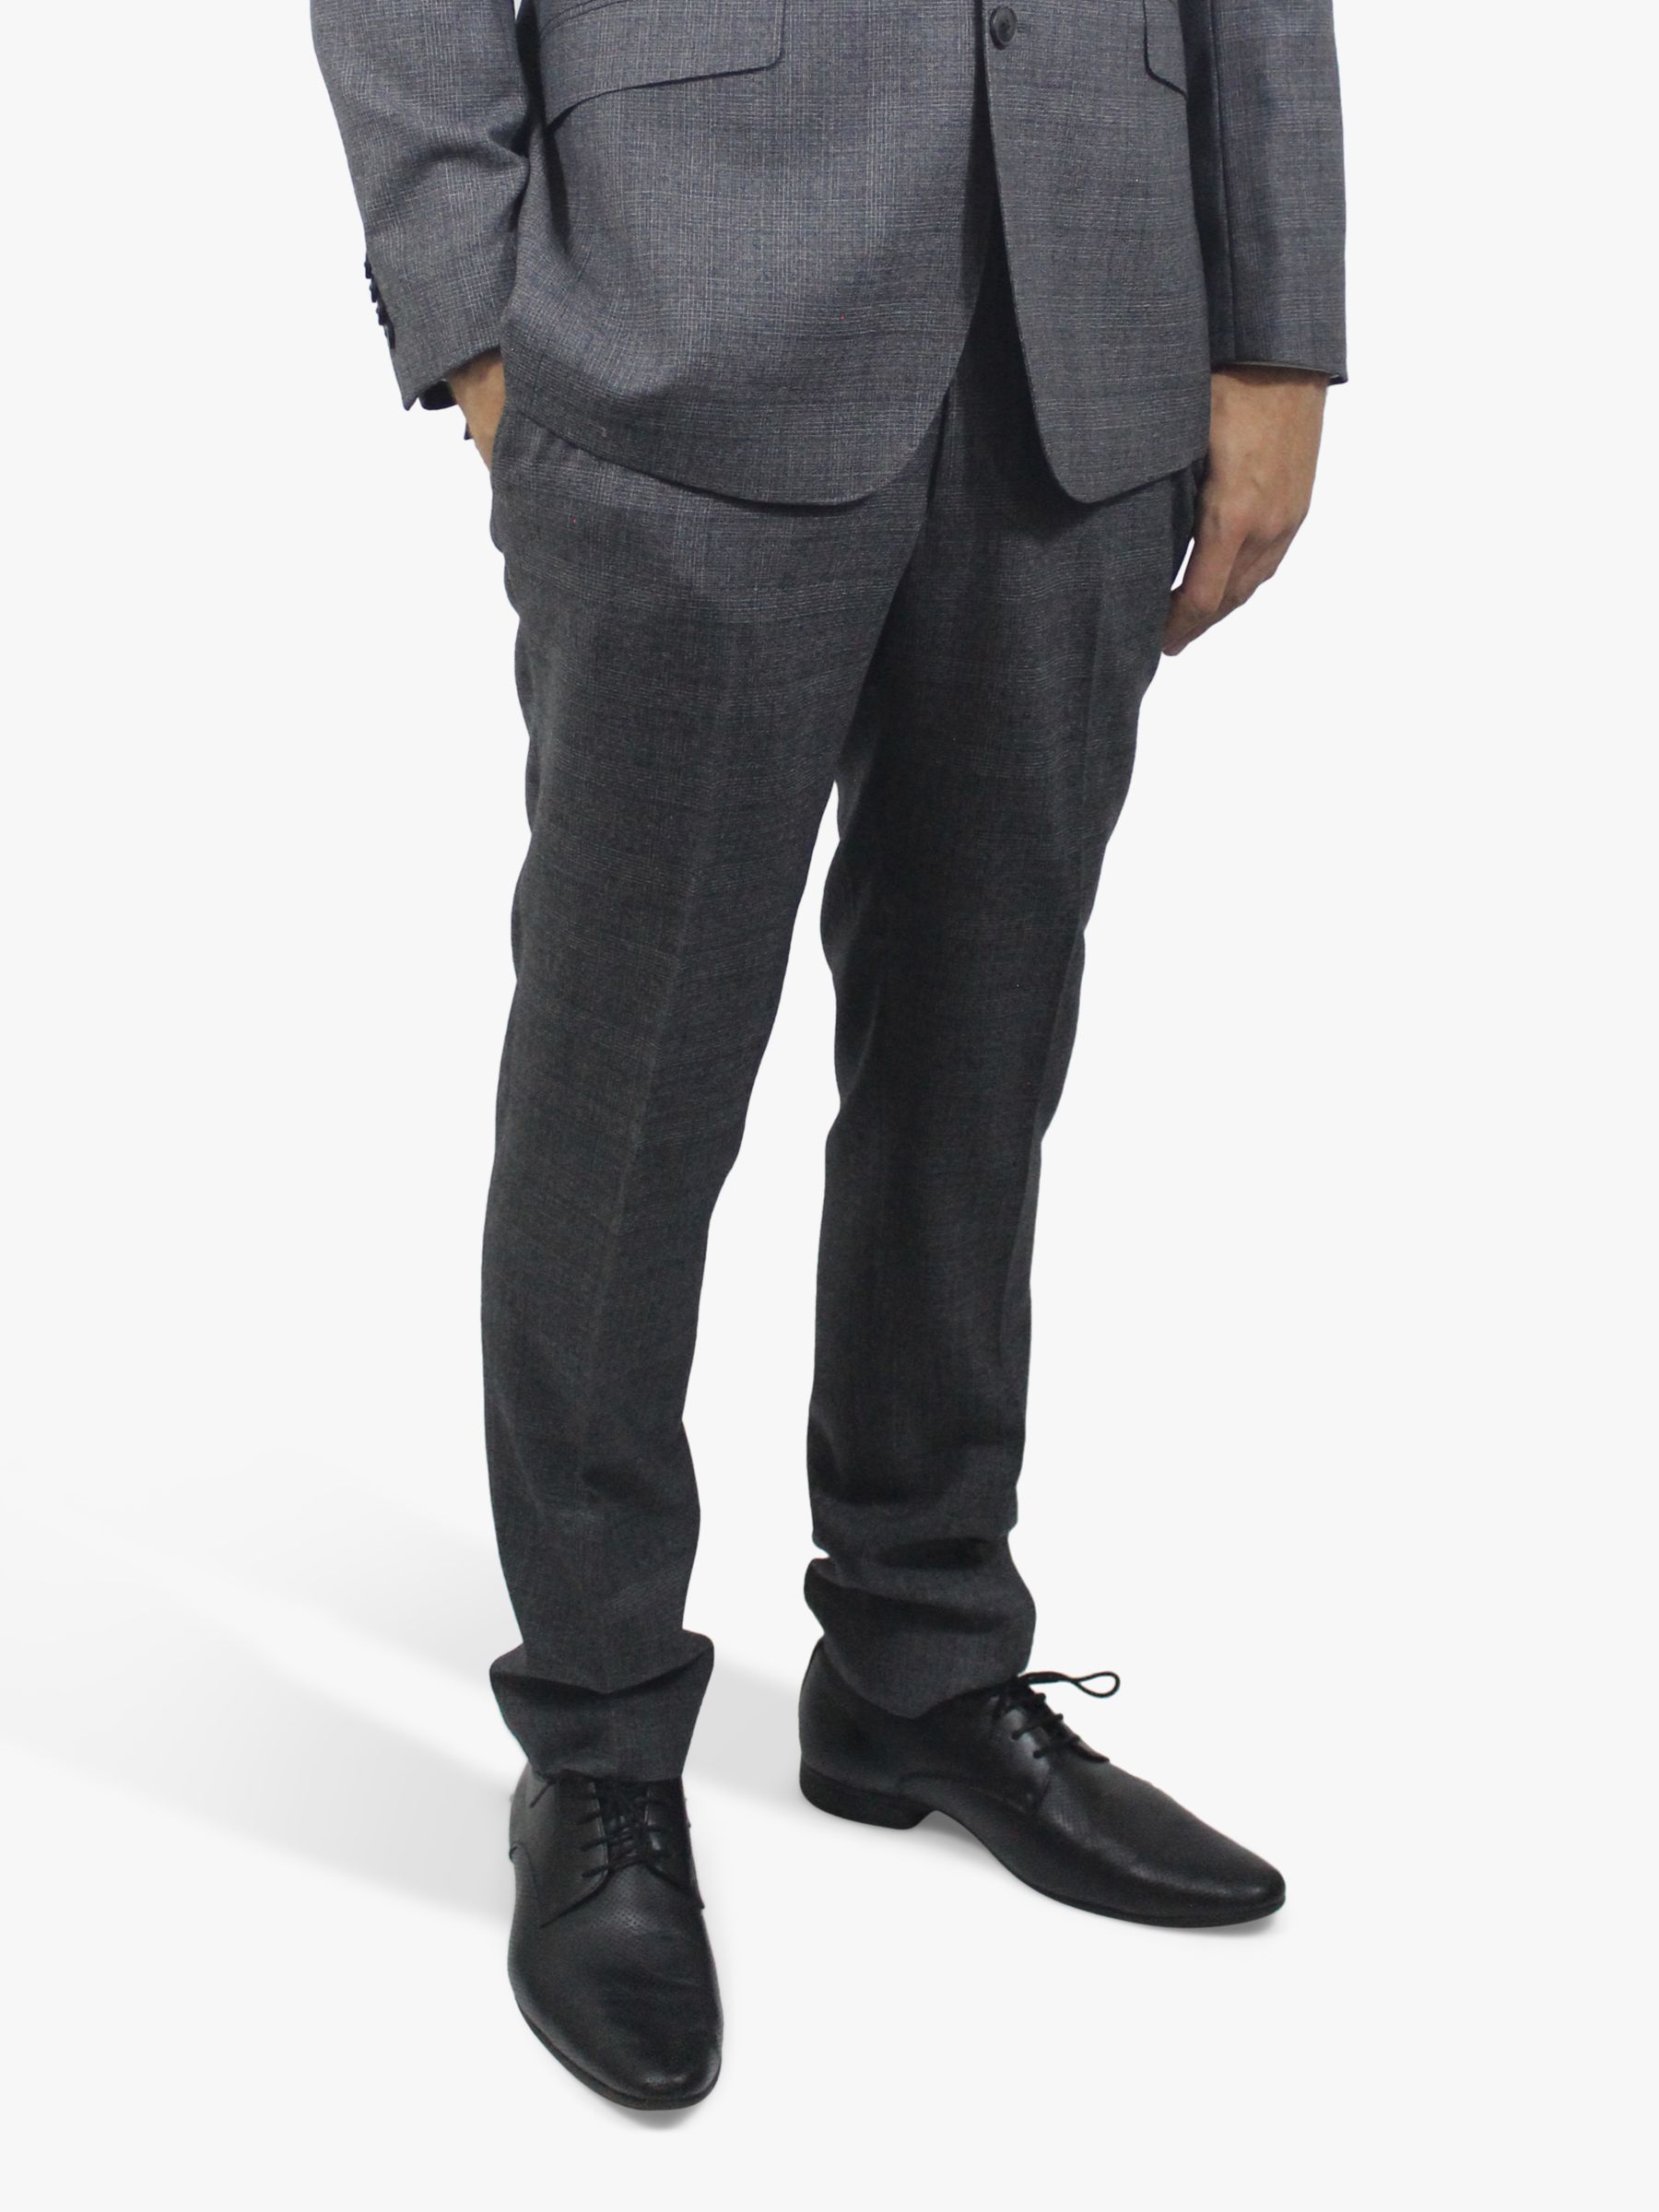 Richard James Mayfair Melange Check Suit Trousers, Grey